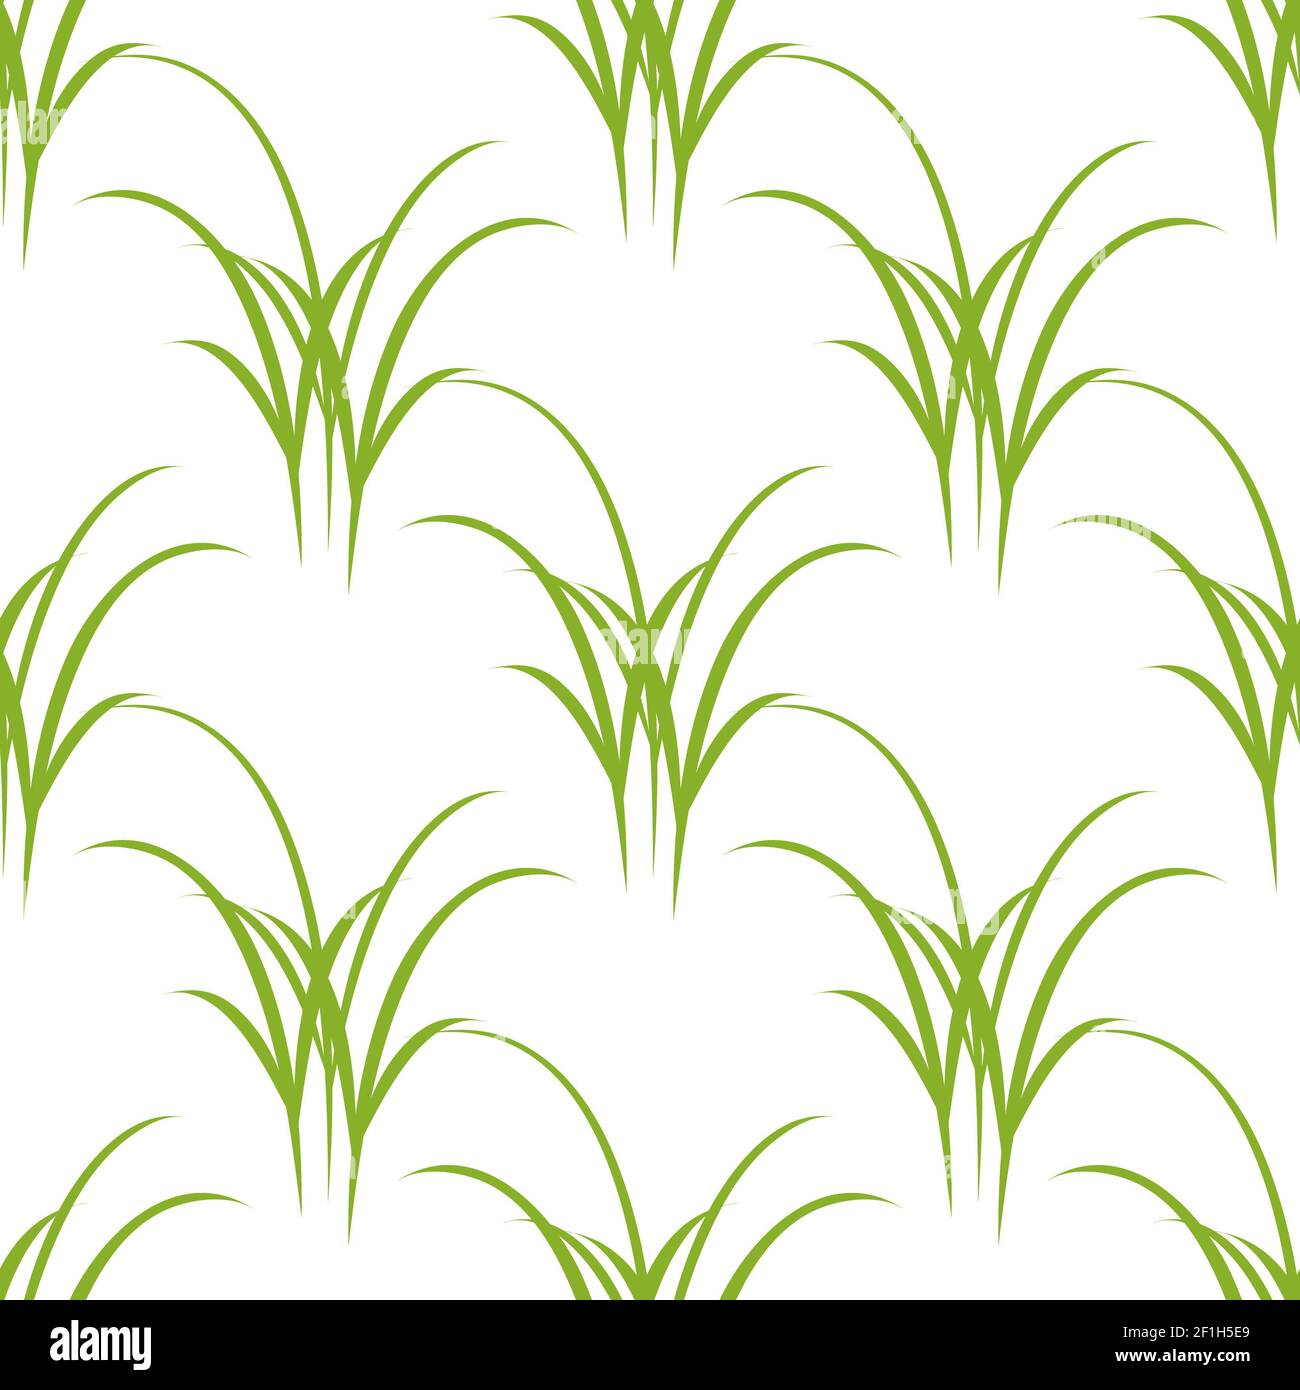 Seamless texture of grass Stock Photo